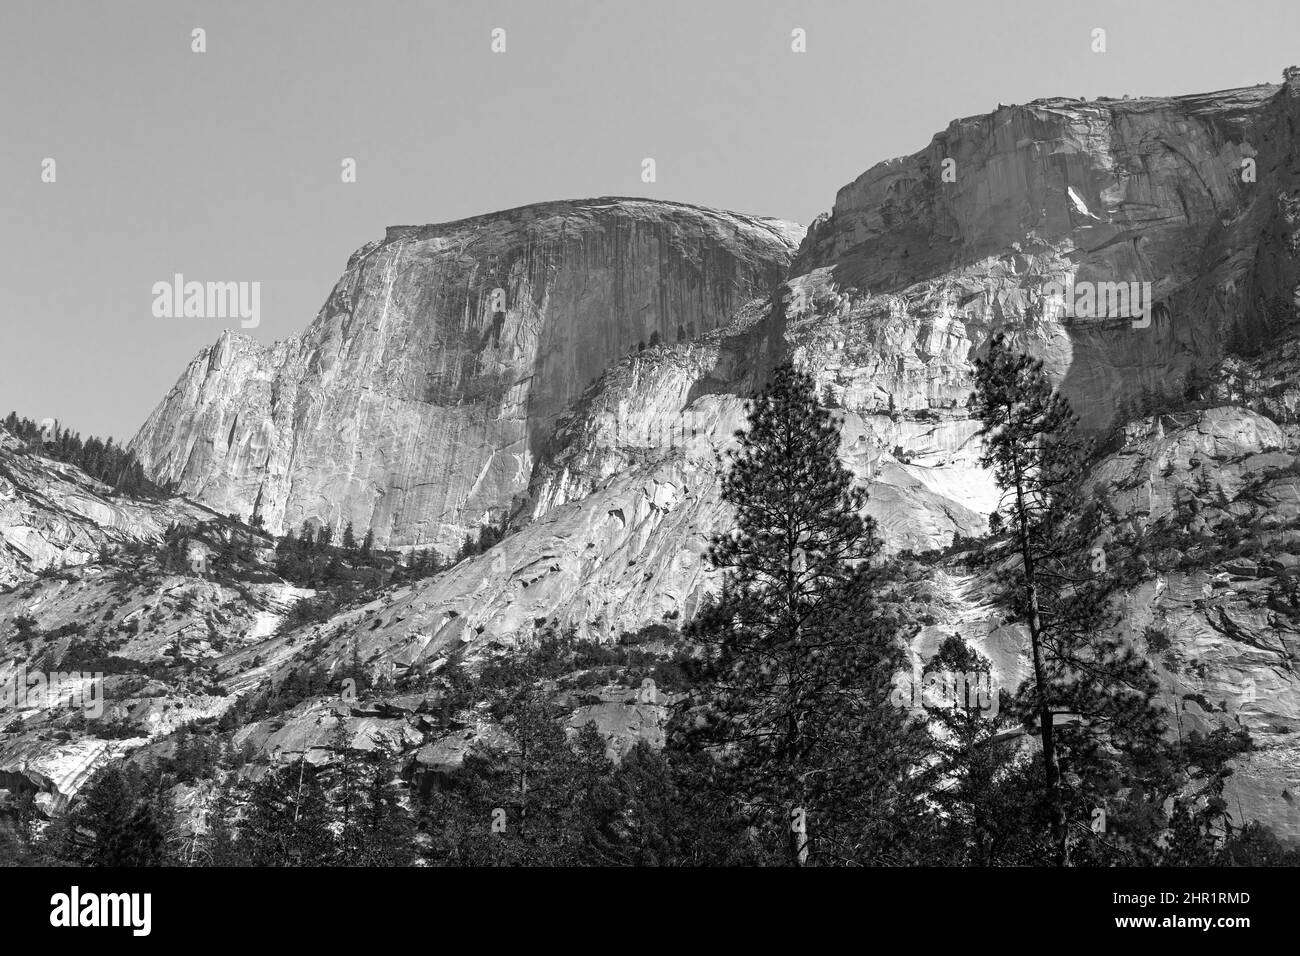 El Capitan Mountain in Yosemite National Park Stock Photo